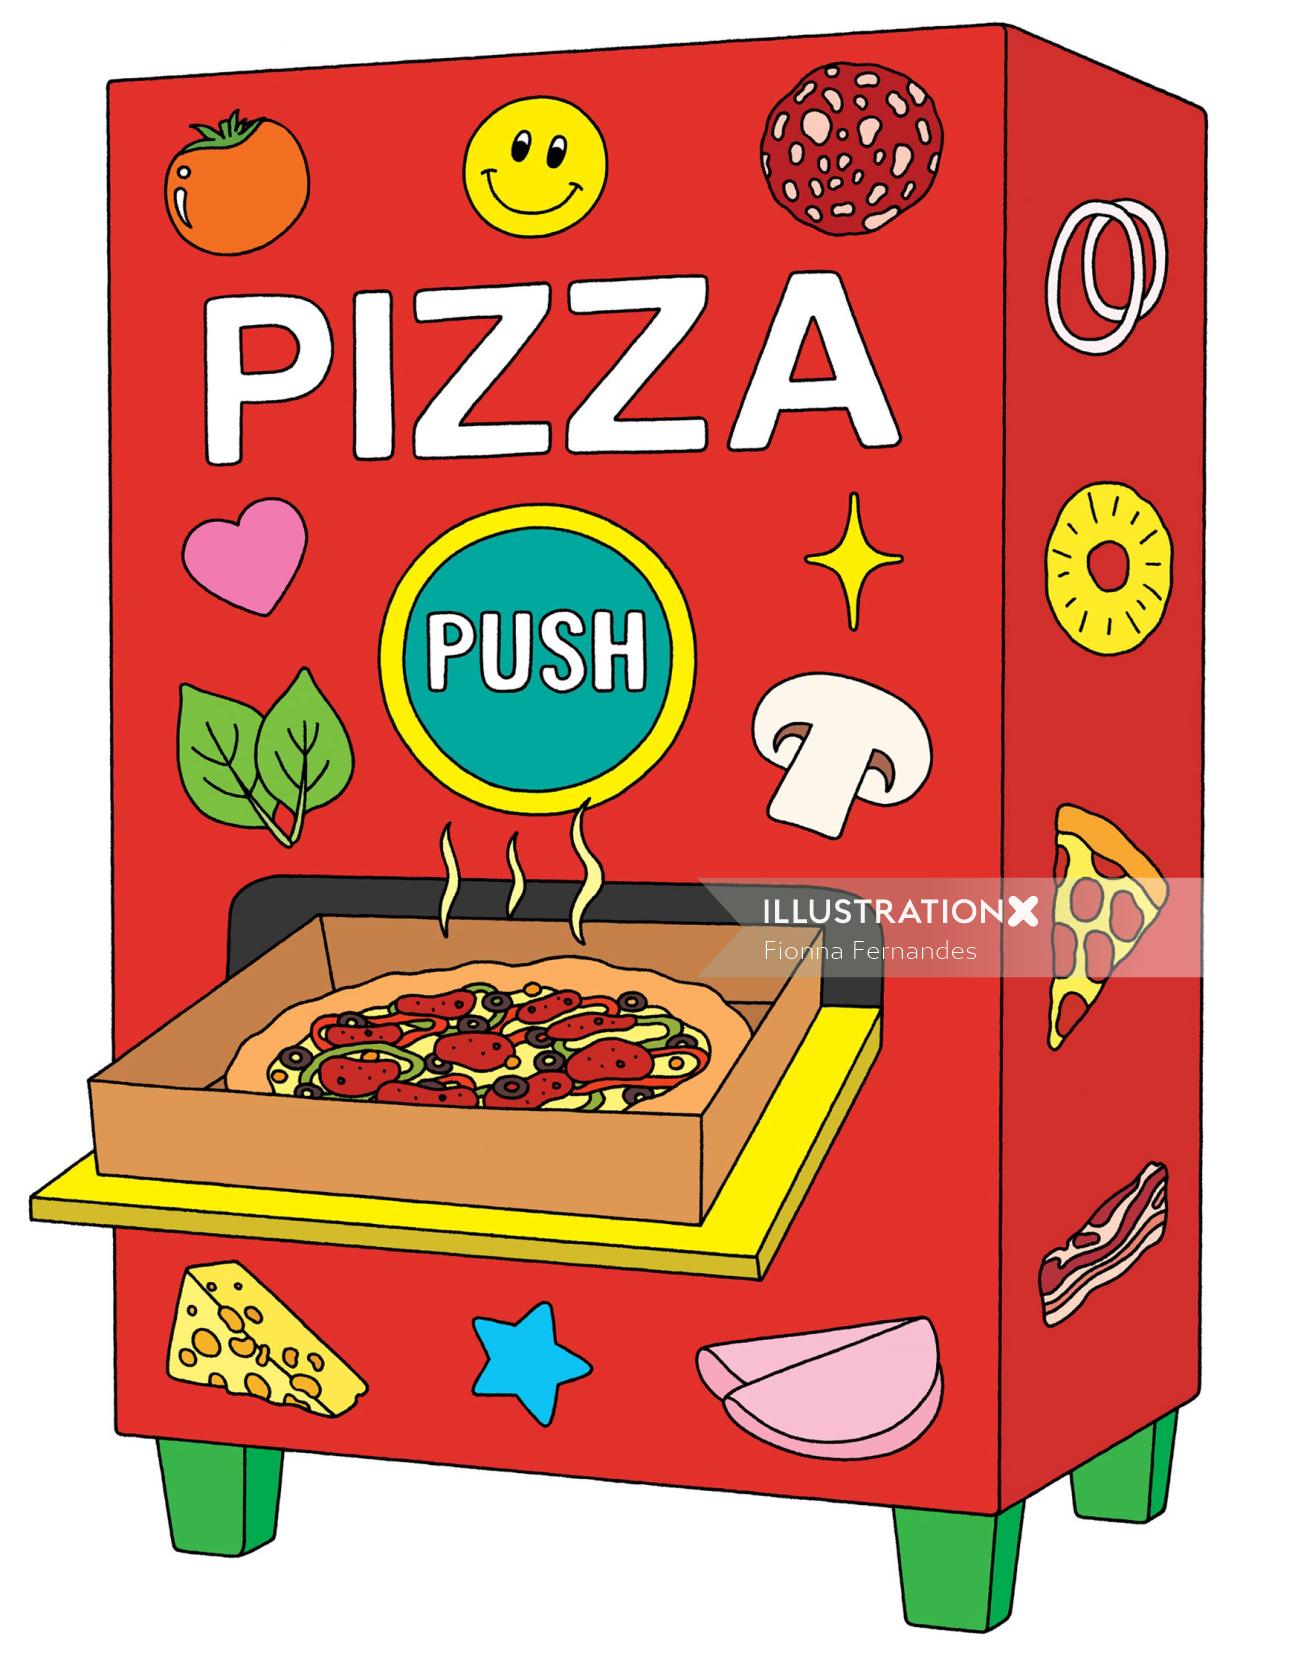 Push-Button Pizza